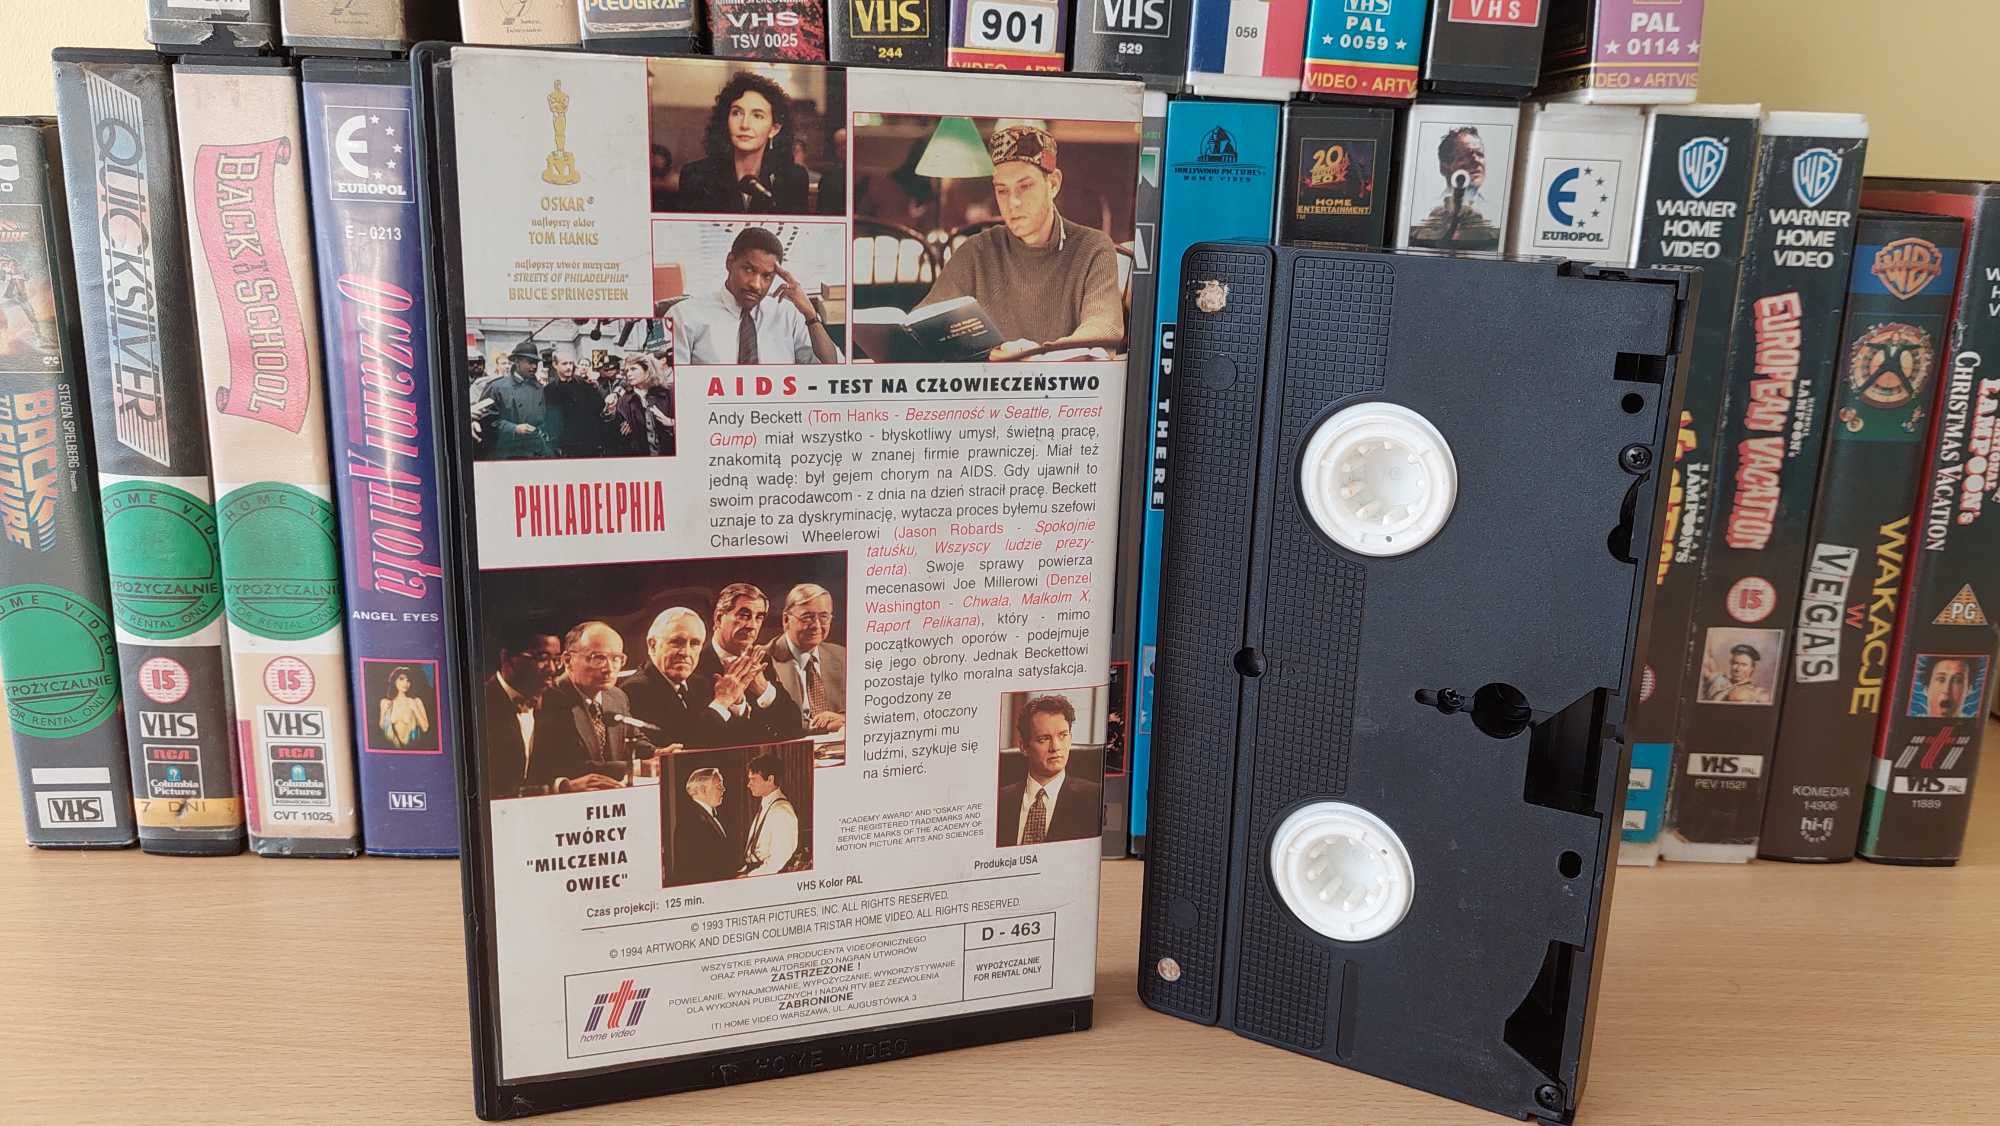 Filadelfia (Philadelphia) - VHS